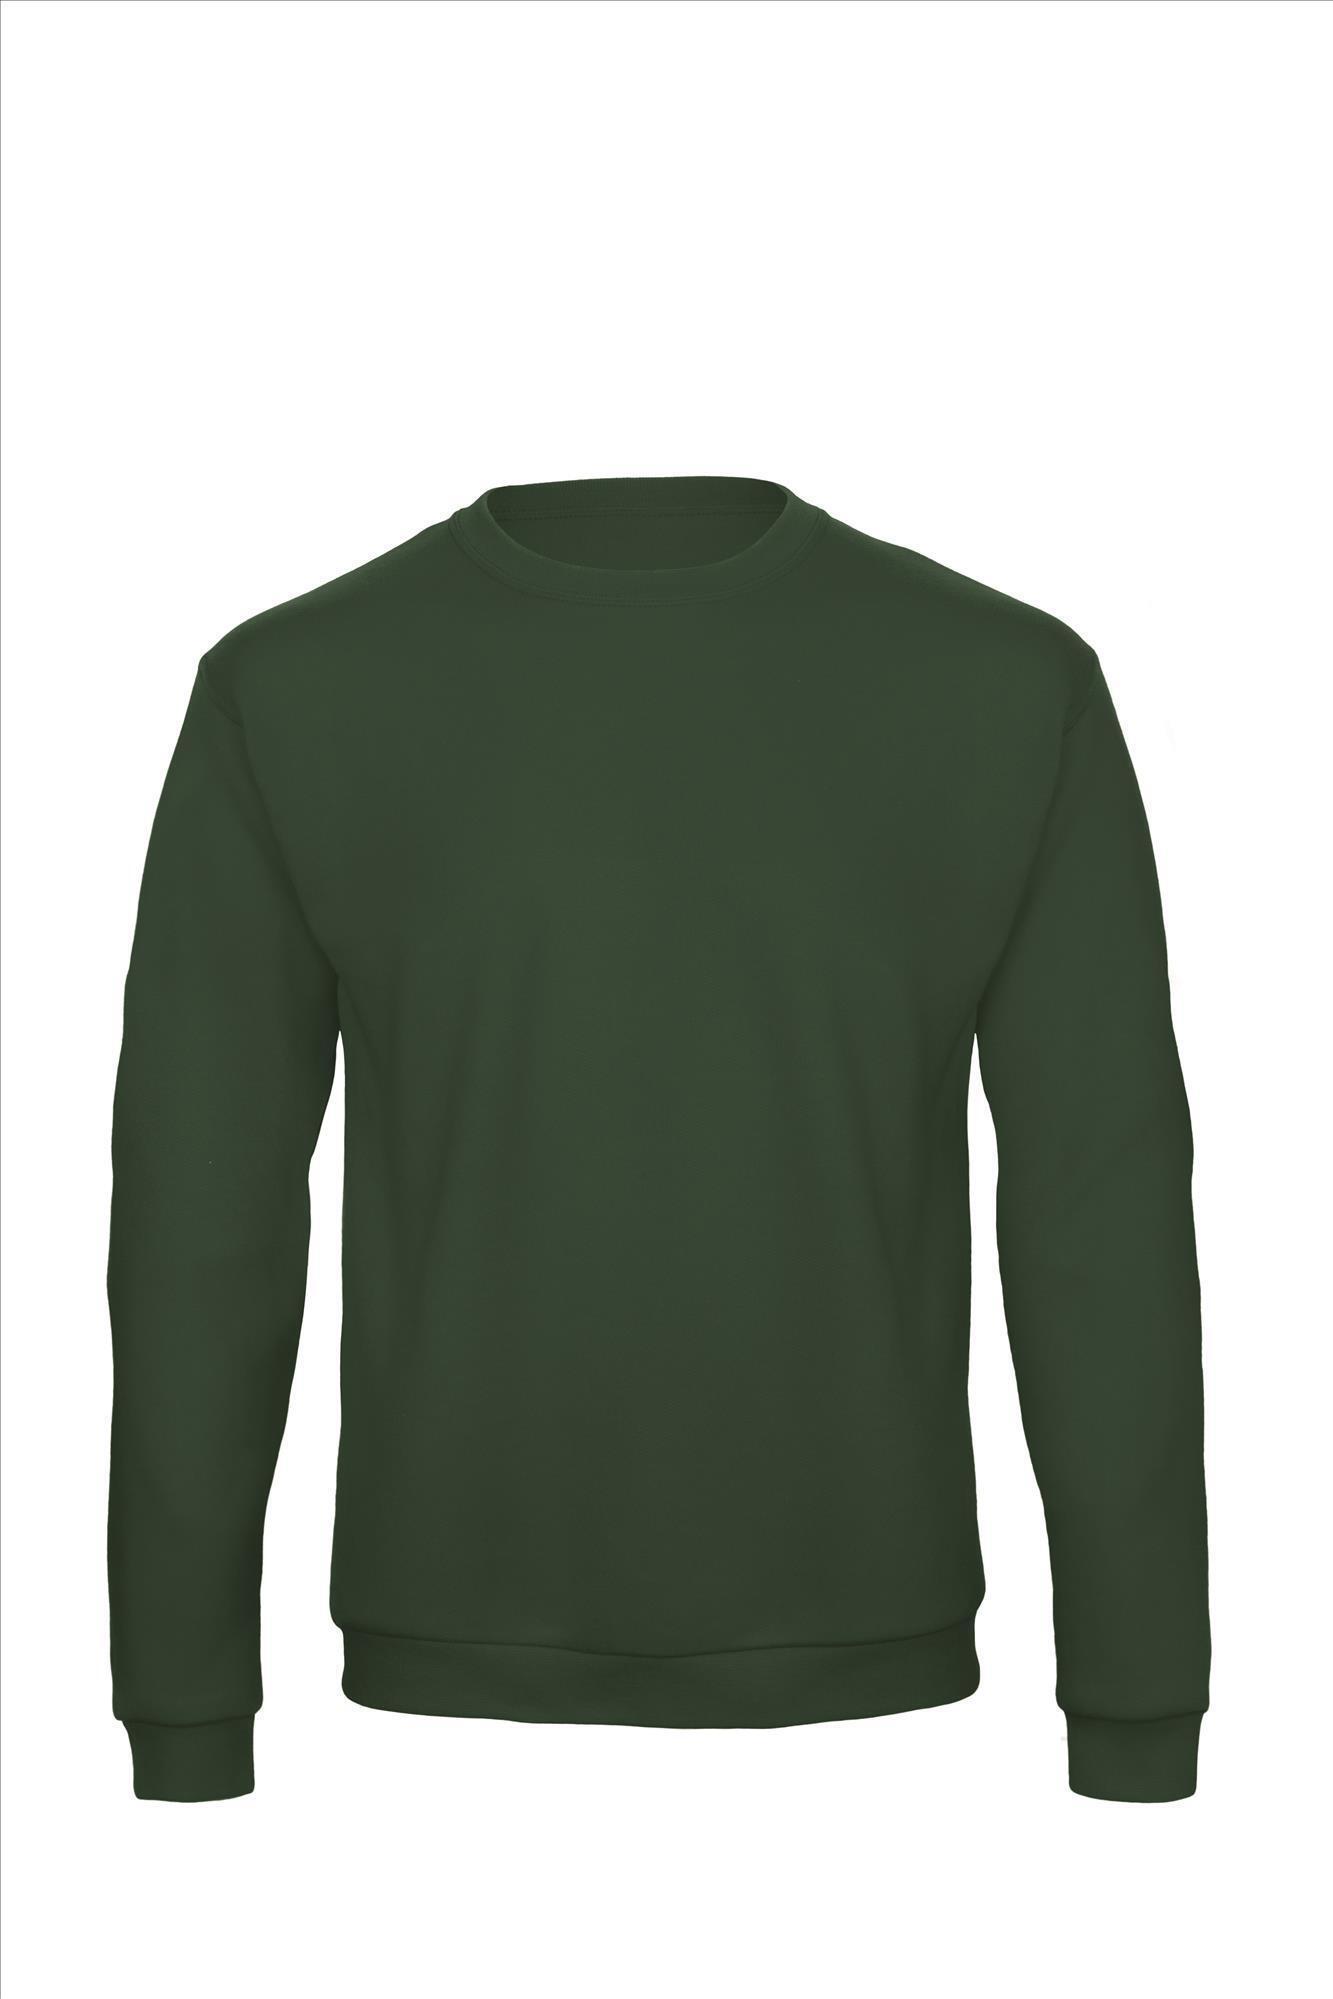 Sweater voor mannen budget bottle green groen